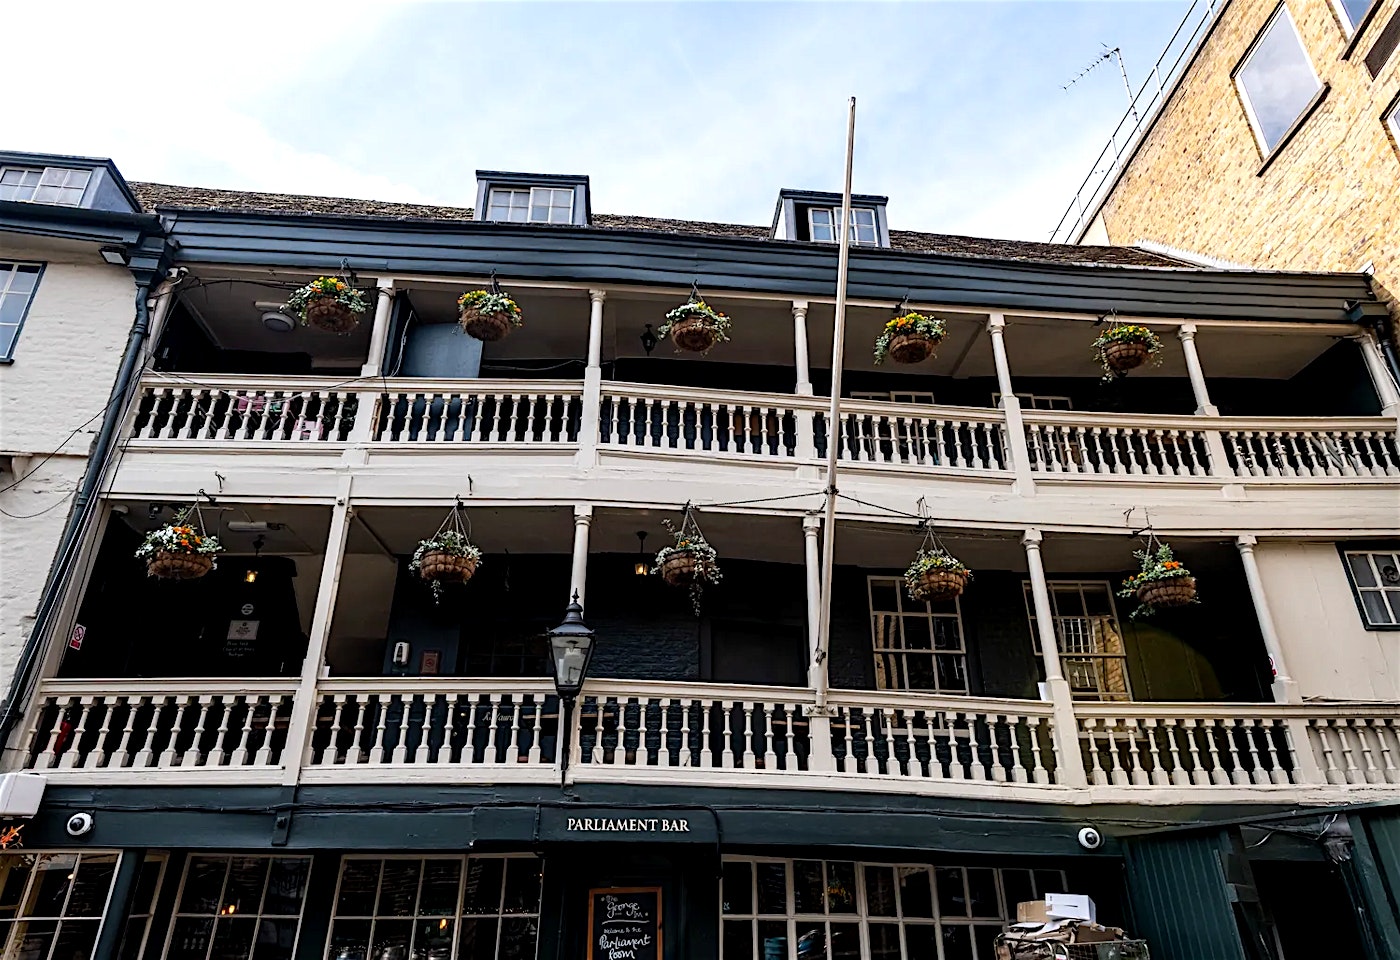 the historic galleries of the London Bridge bar The George pub